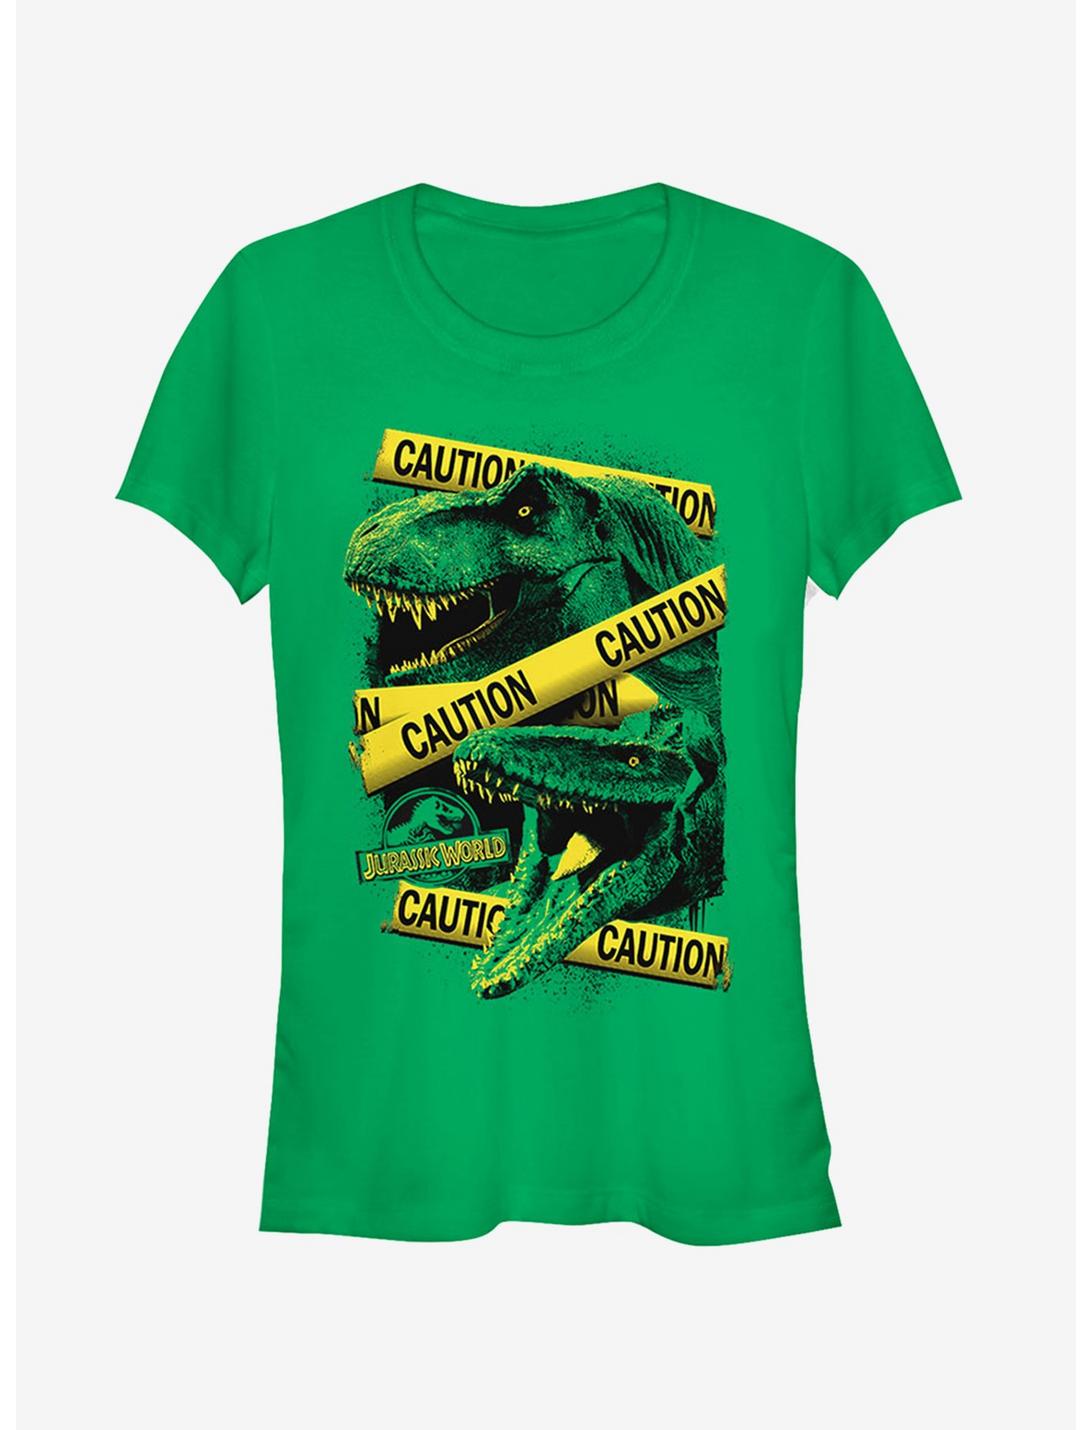 Jurassic World Fallen Kingdom Caution Tape Girls T-Shirt, KELLY, hi-res